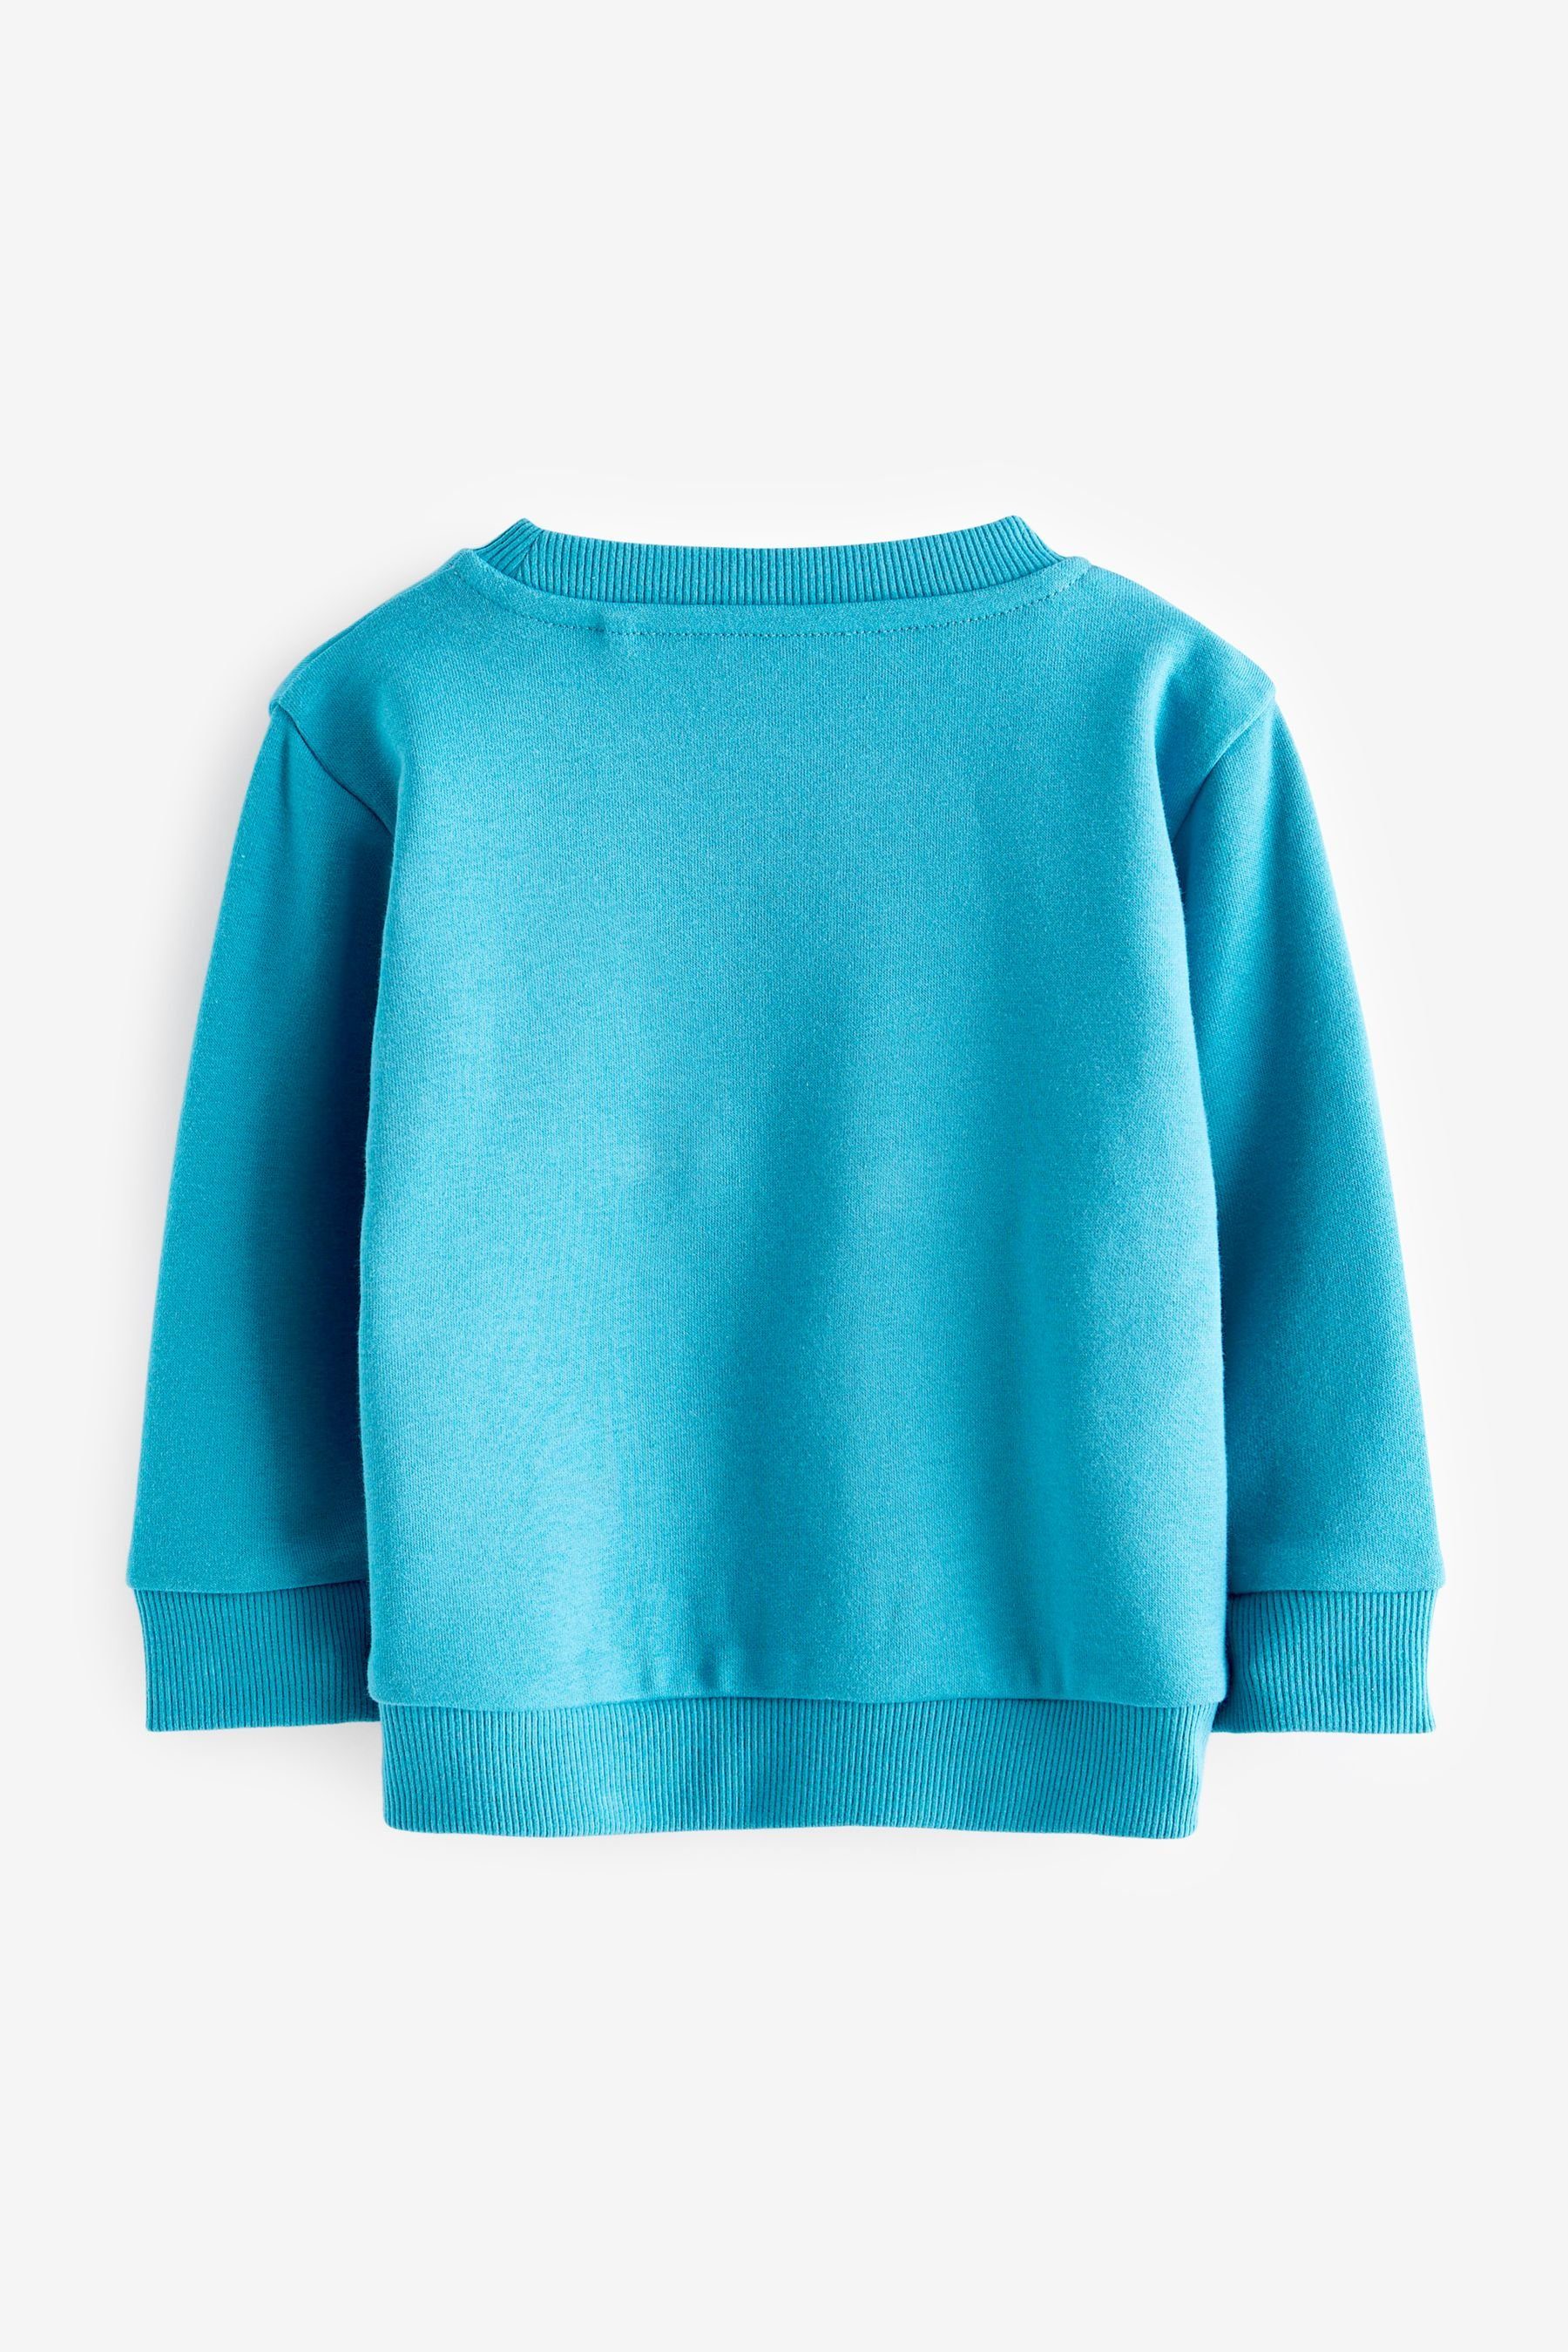 Street Sesame Sweatshirt Next Sweatshirt (1-tlg)